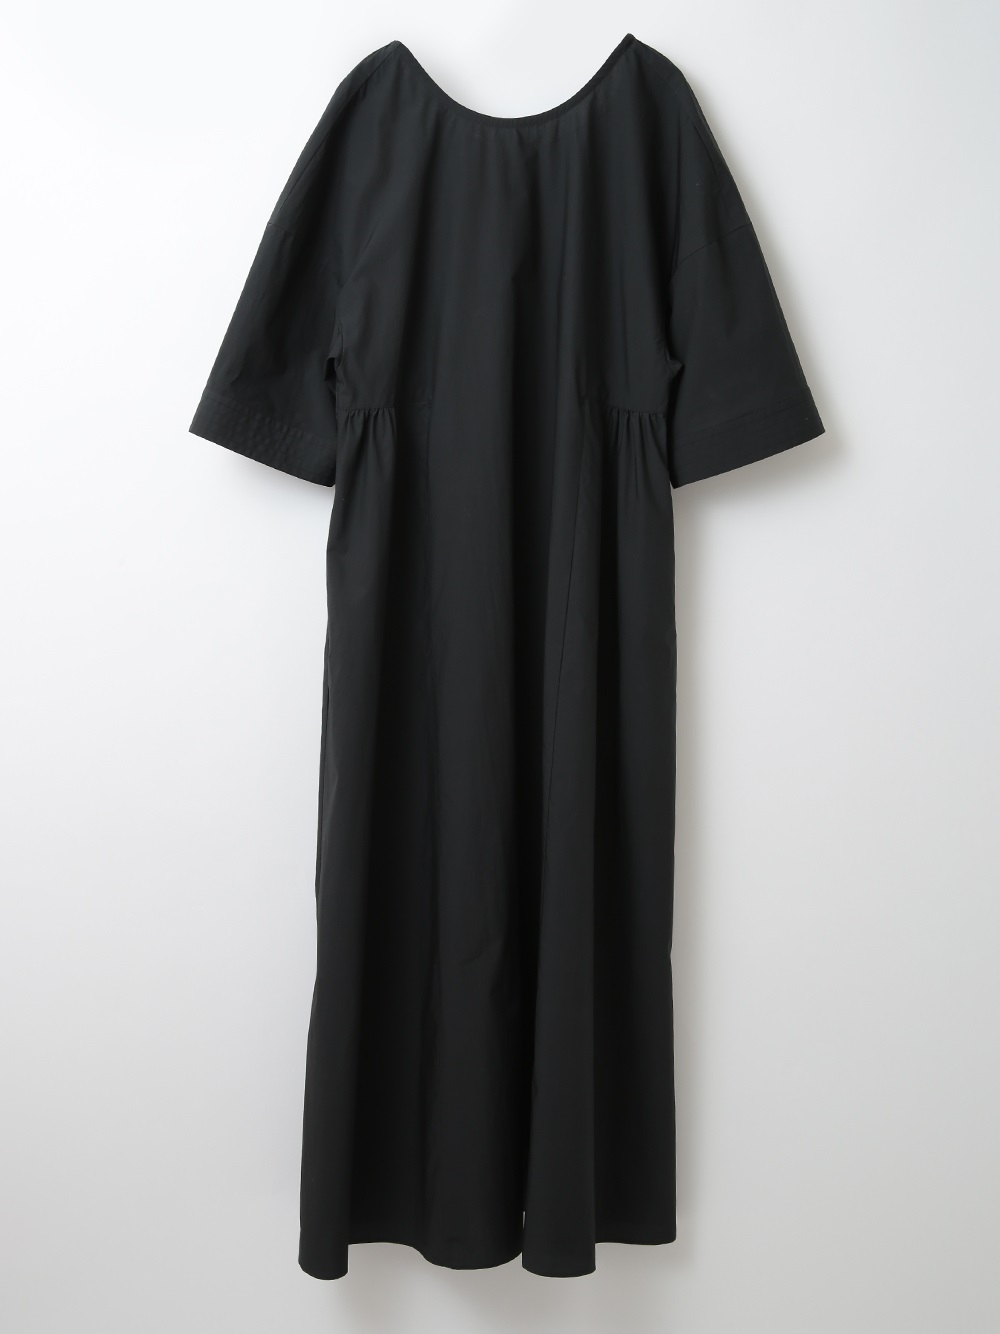 Gathered Bacｋ Dress(00ブラック-フリー)